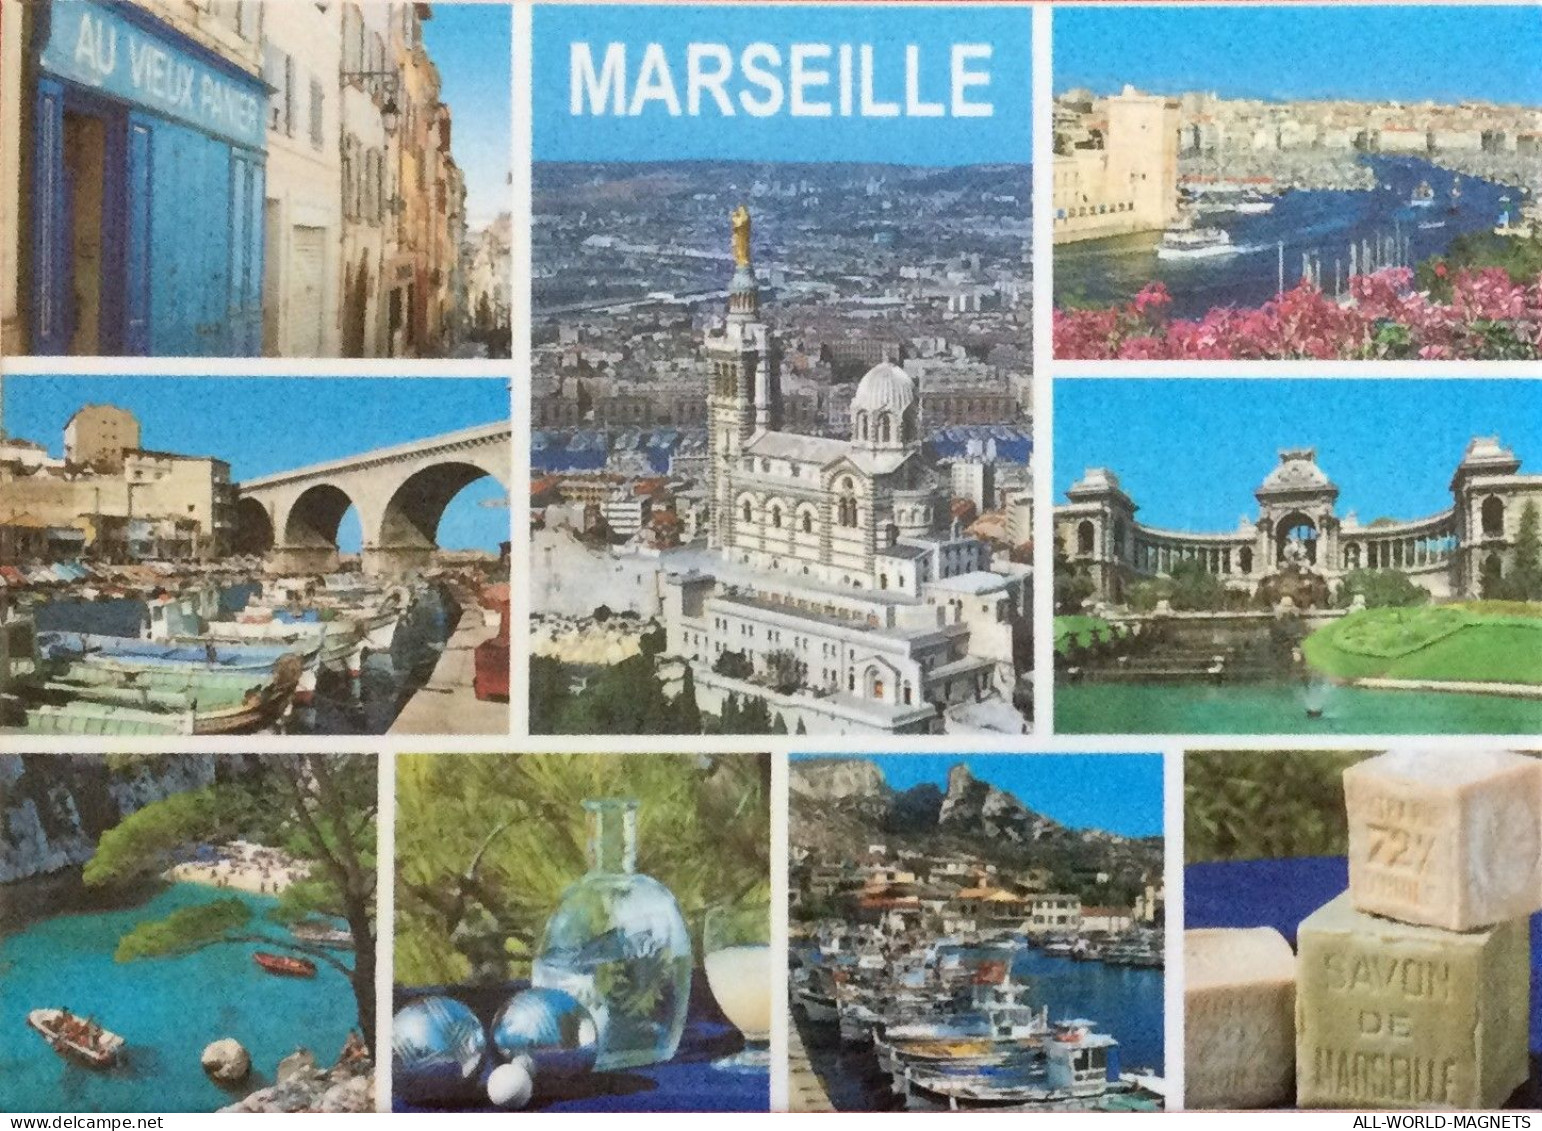 Marseille City Views Fridge Magnet, France - Magnetos